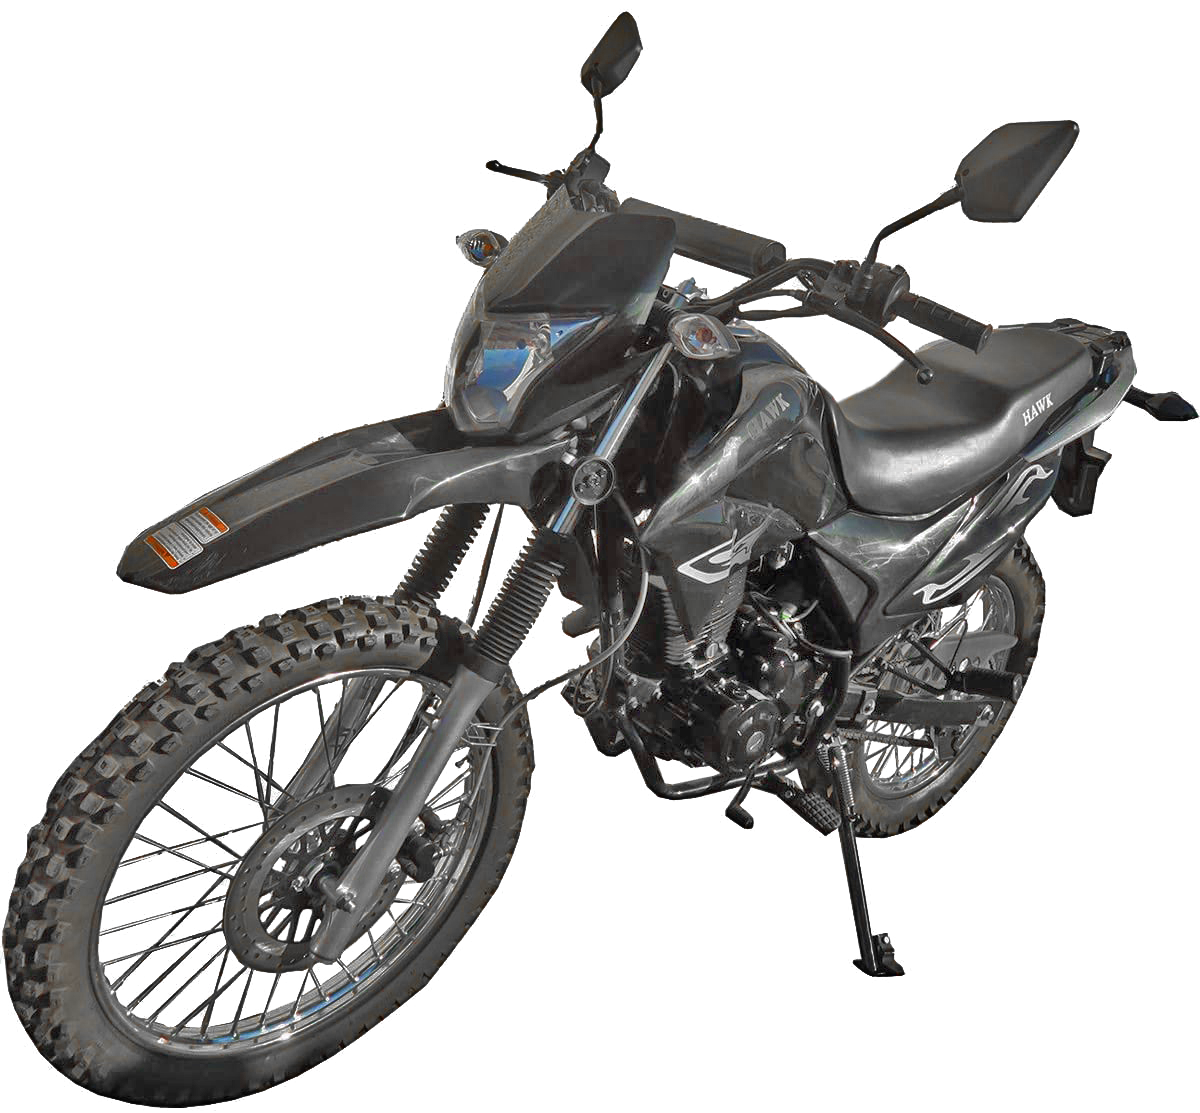 Hawk Enduro 250cc Dual Sports Dirt Bike -Street Legal Motorcycle